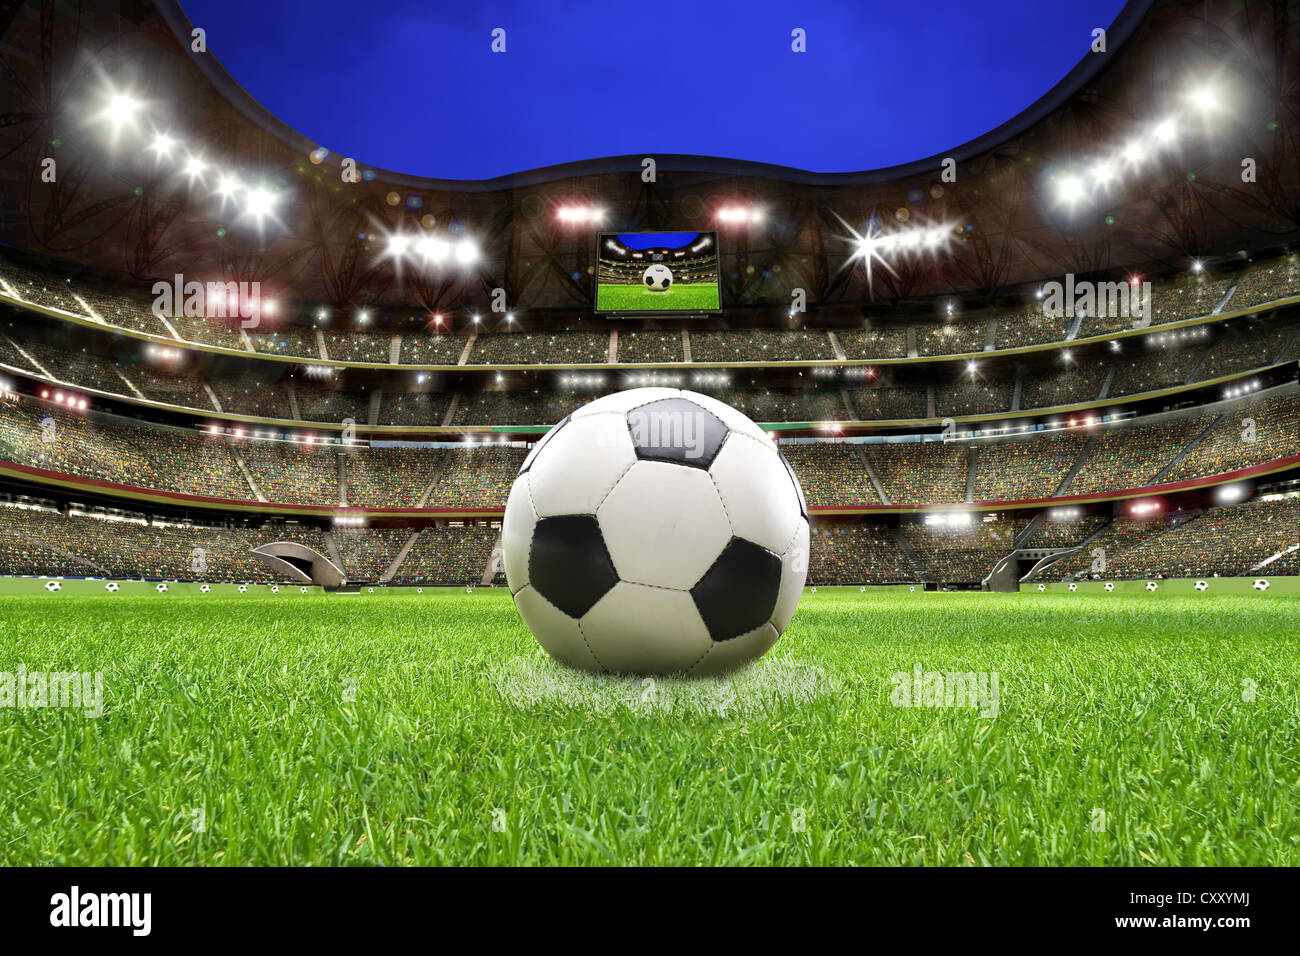 Soccer ball, soccer stadium, lawn, grand stand Stock Photo